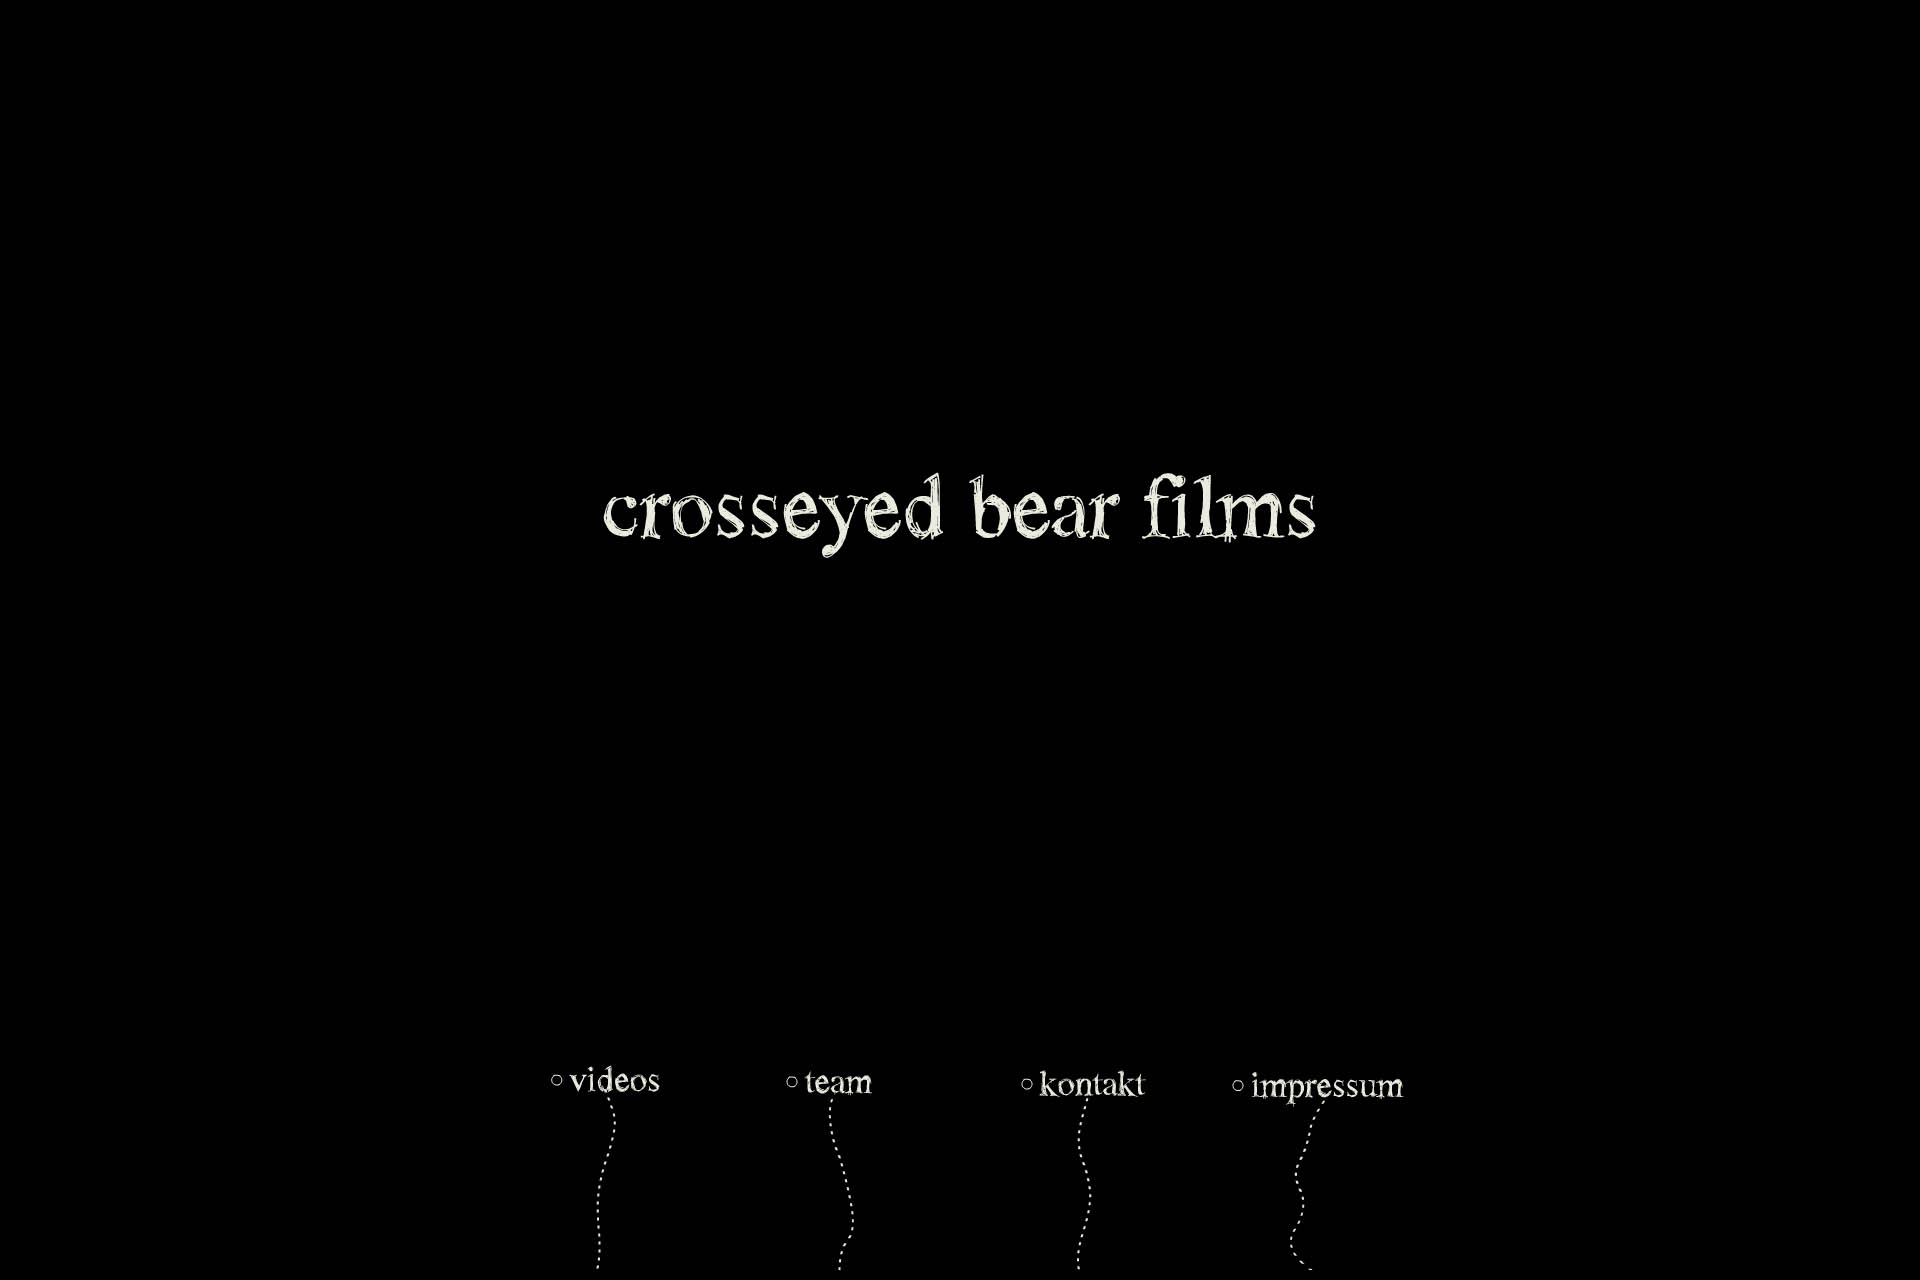 Crosseyed bear